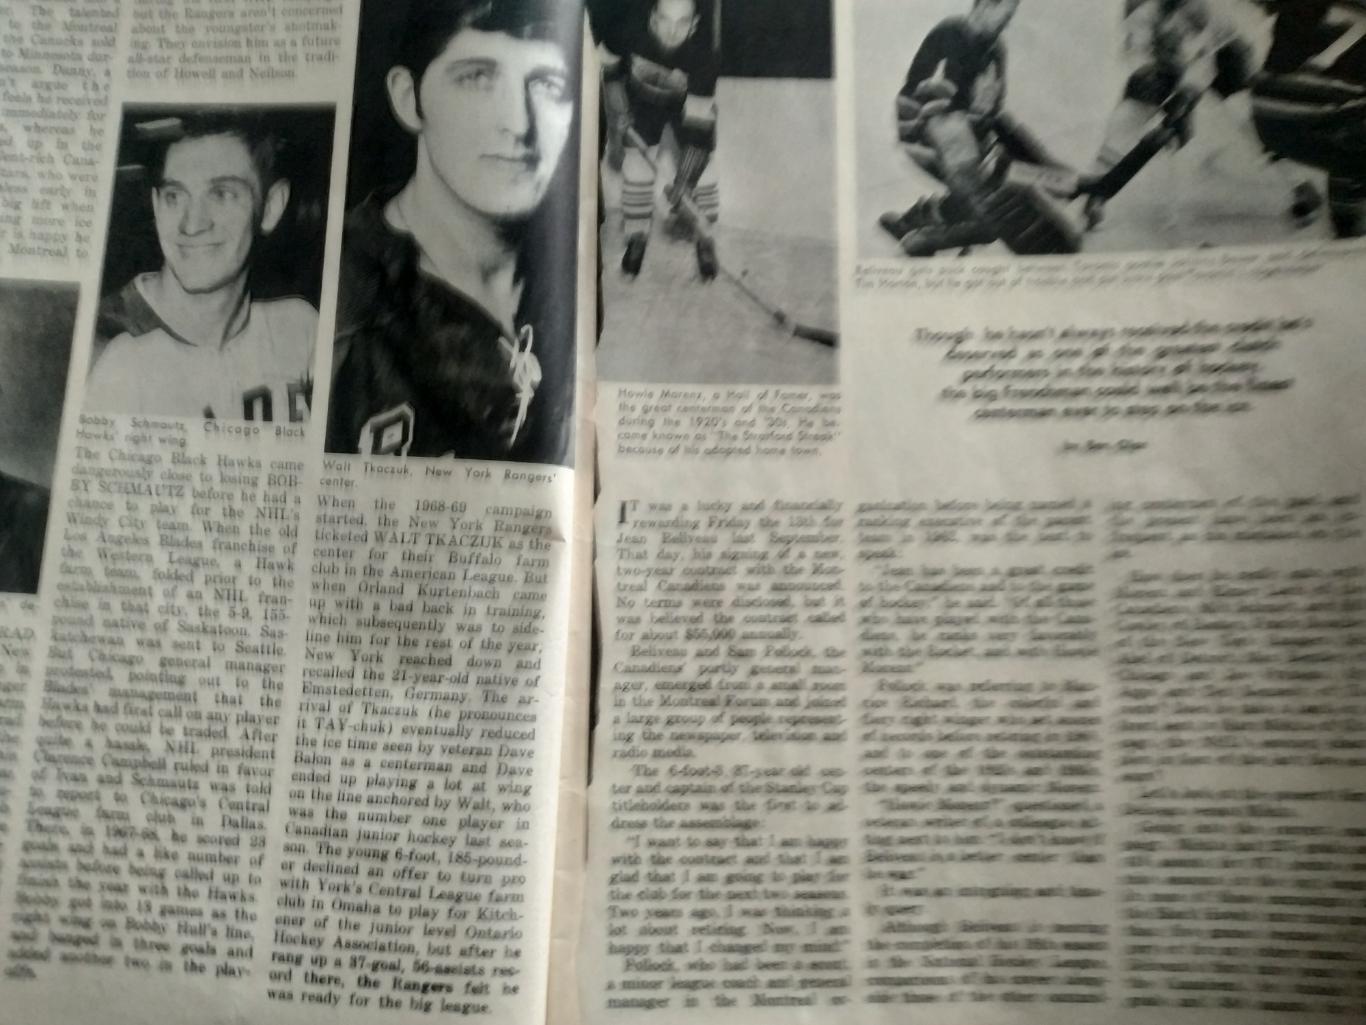 ЖУРНАЛ НХЛ СПОРТ СПЕШИАЛ ХОККЕЙ MAY 1969 NHL SPORTS SPECIAL HOCKEY 2